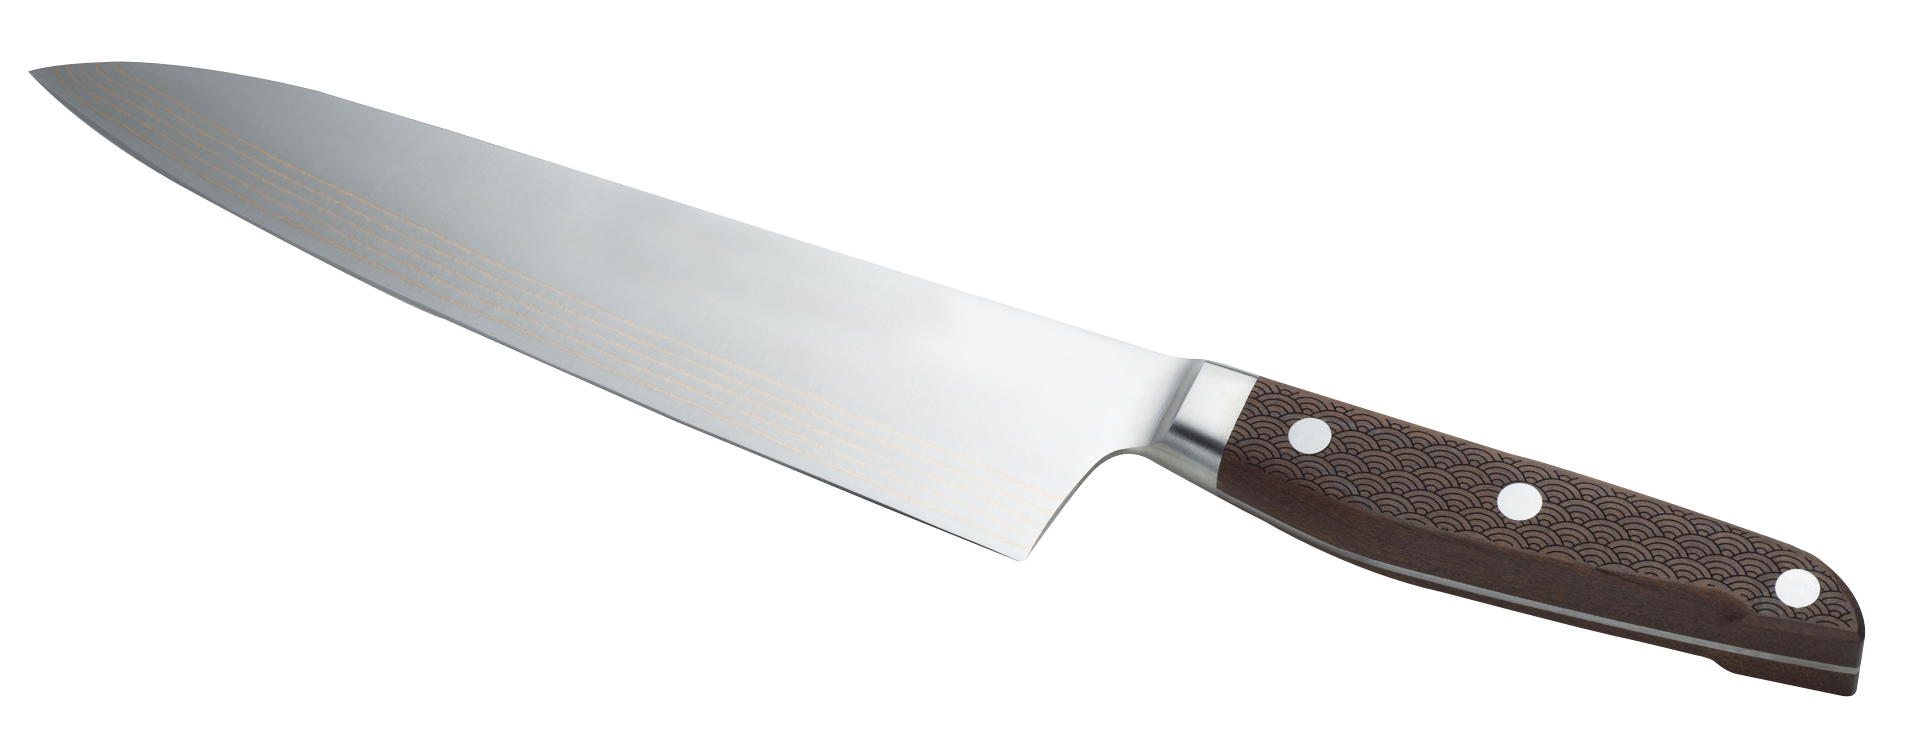 Knife PNG-PlusPNG.com-1250